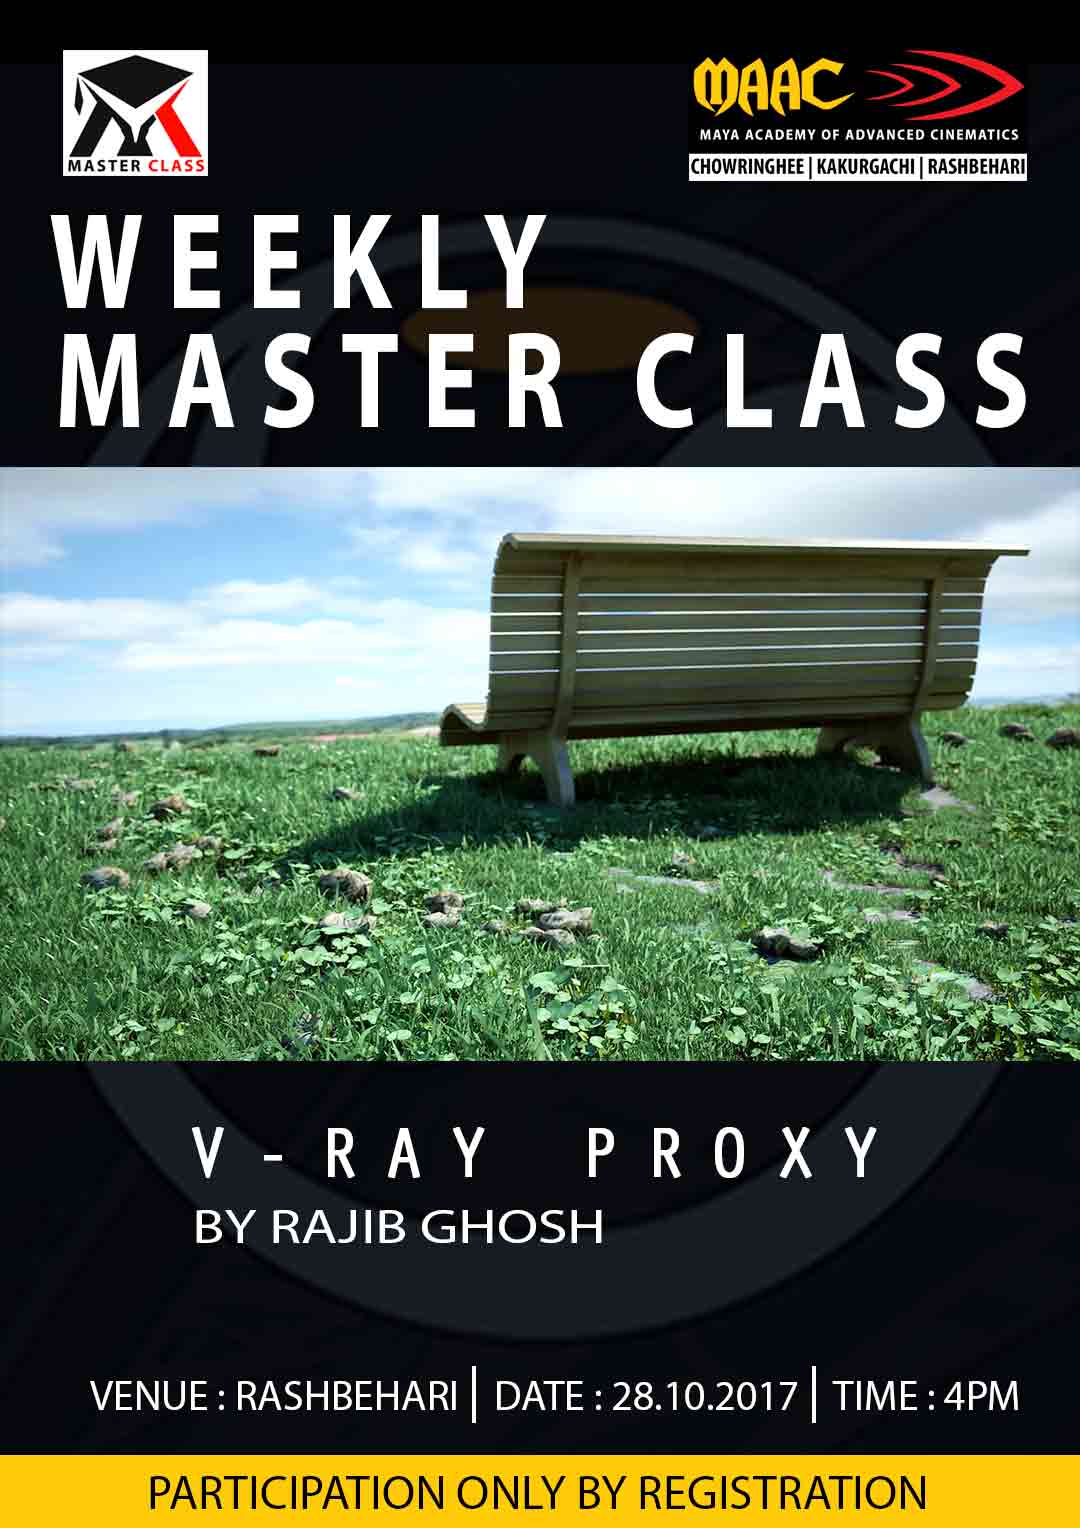 Weekly Master Class on V-Ray Proxy - Rajib Ghosh